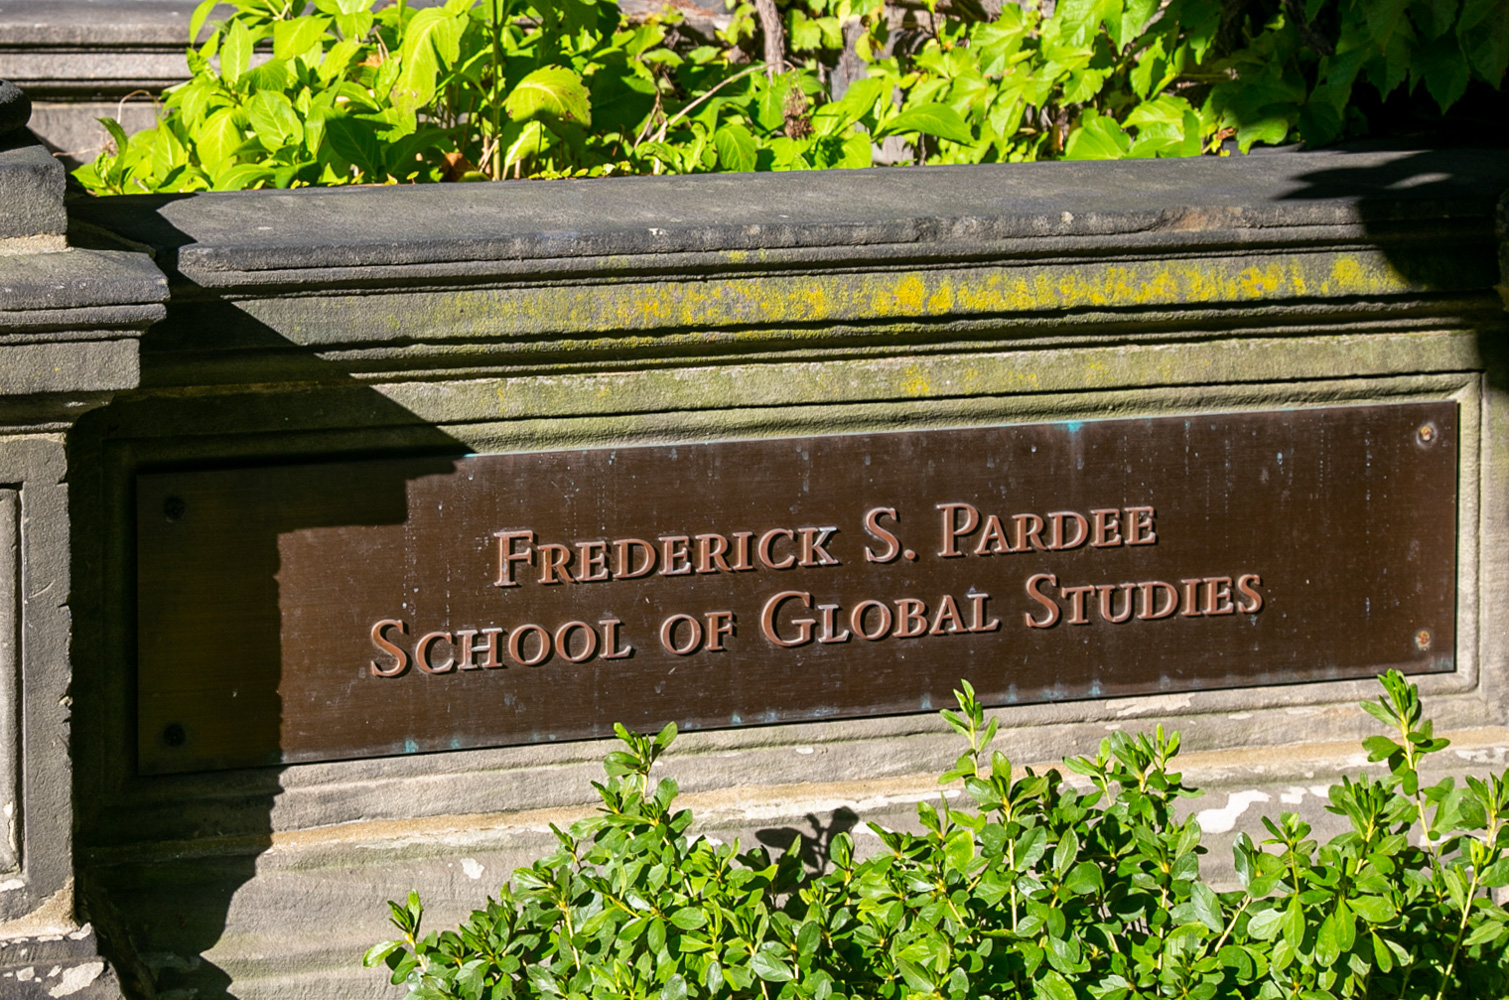 Plaque that says "Frederick S. Pardee School of Global Studies"